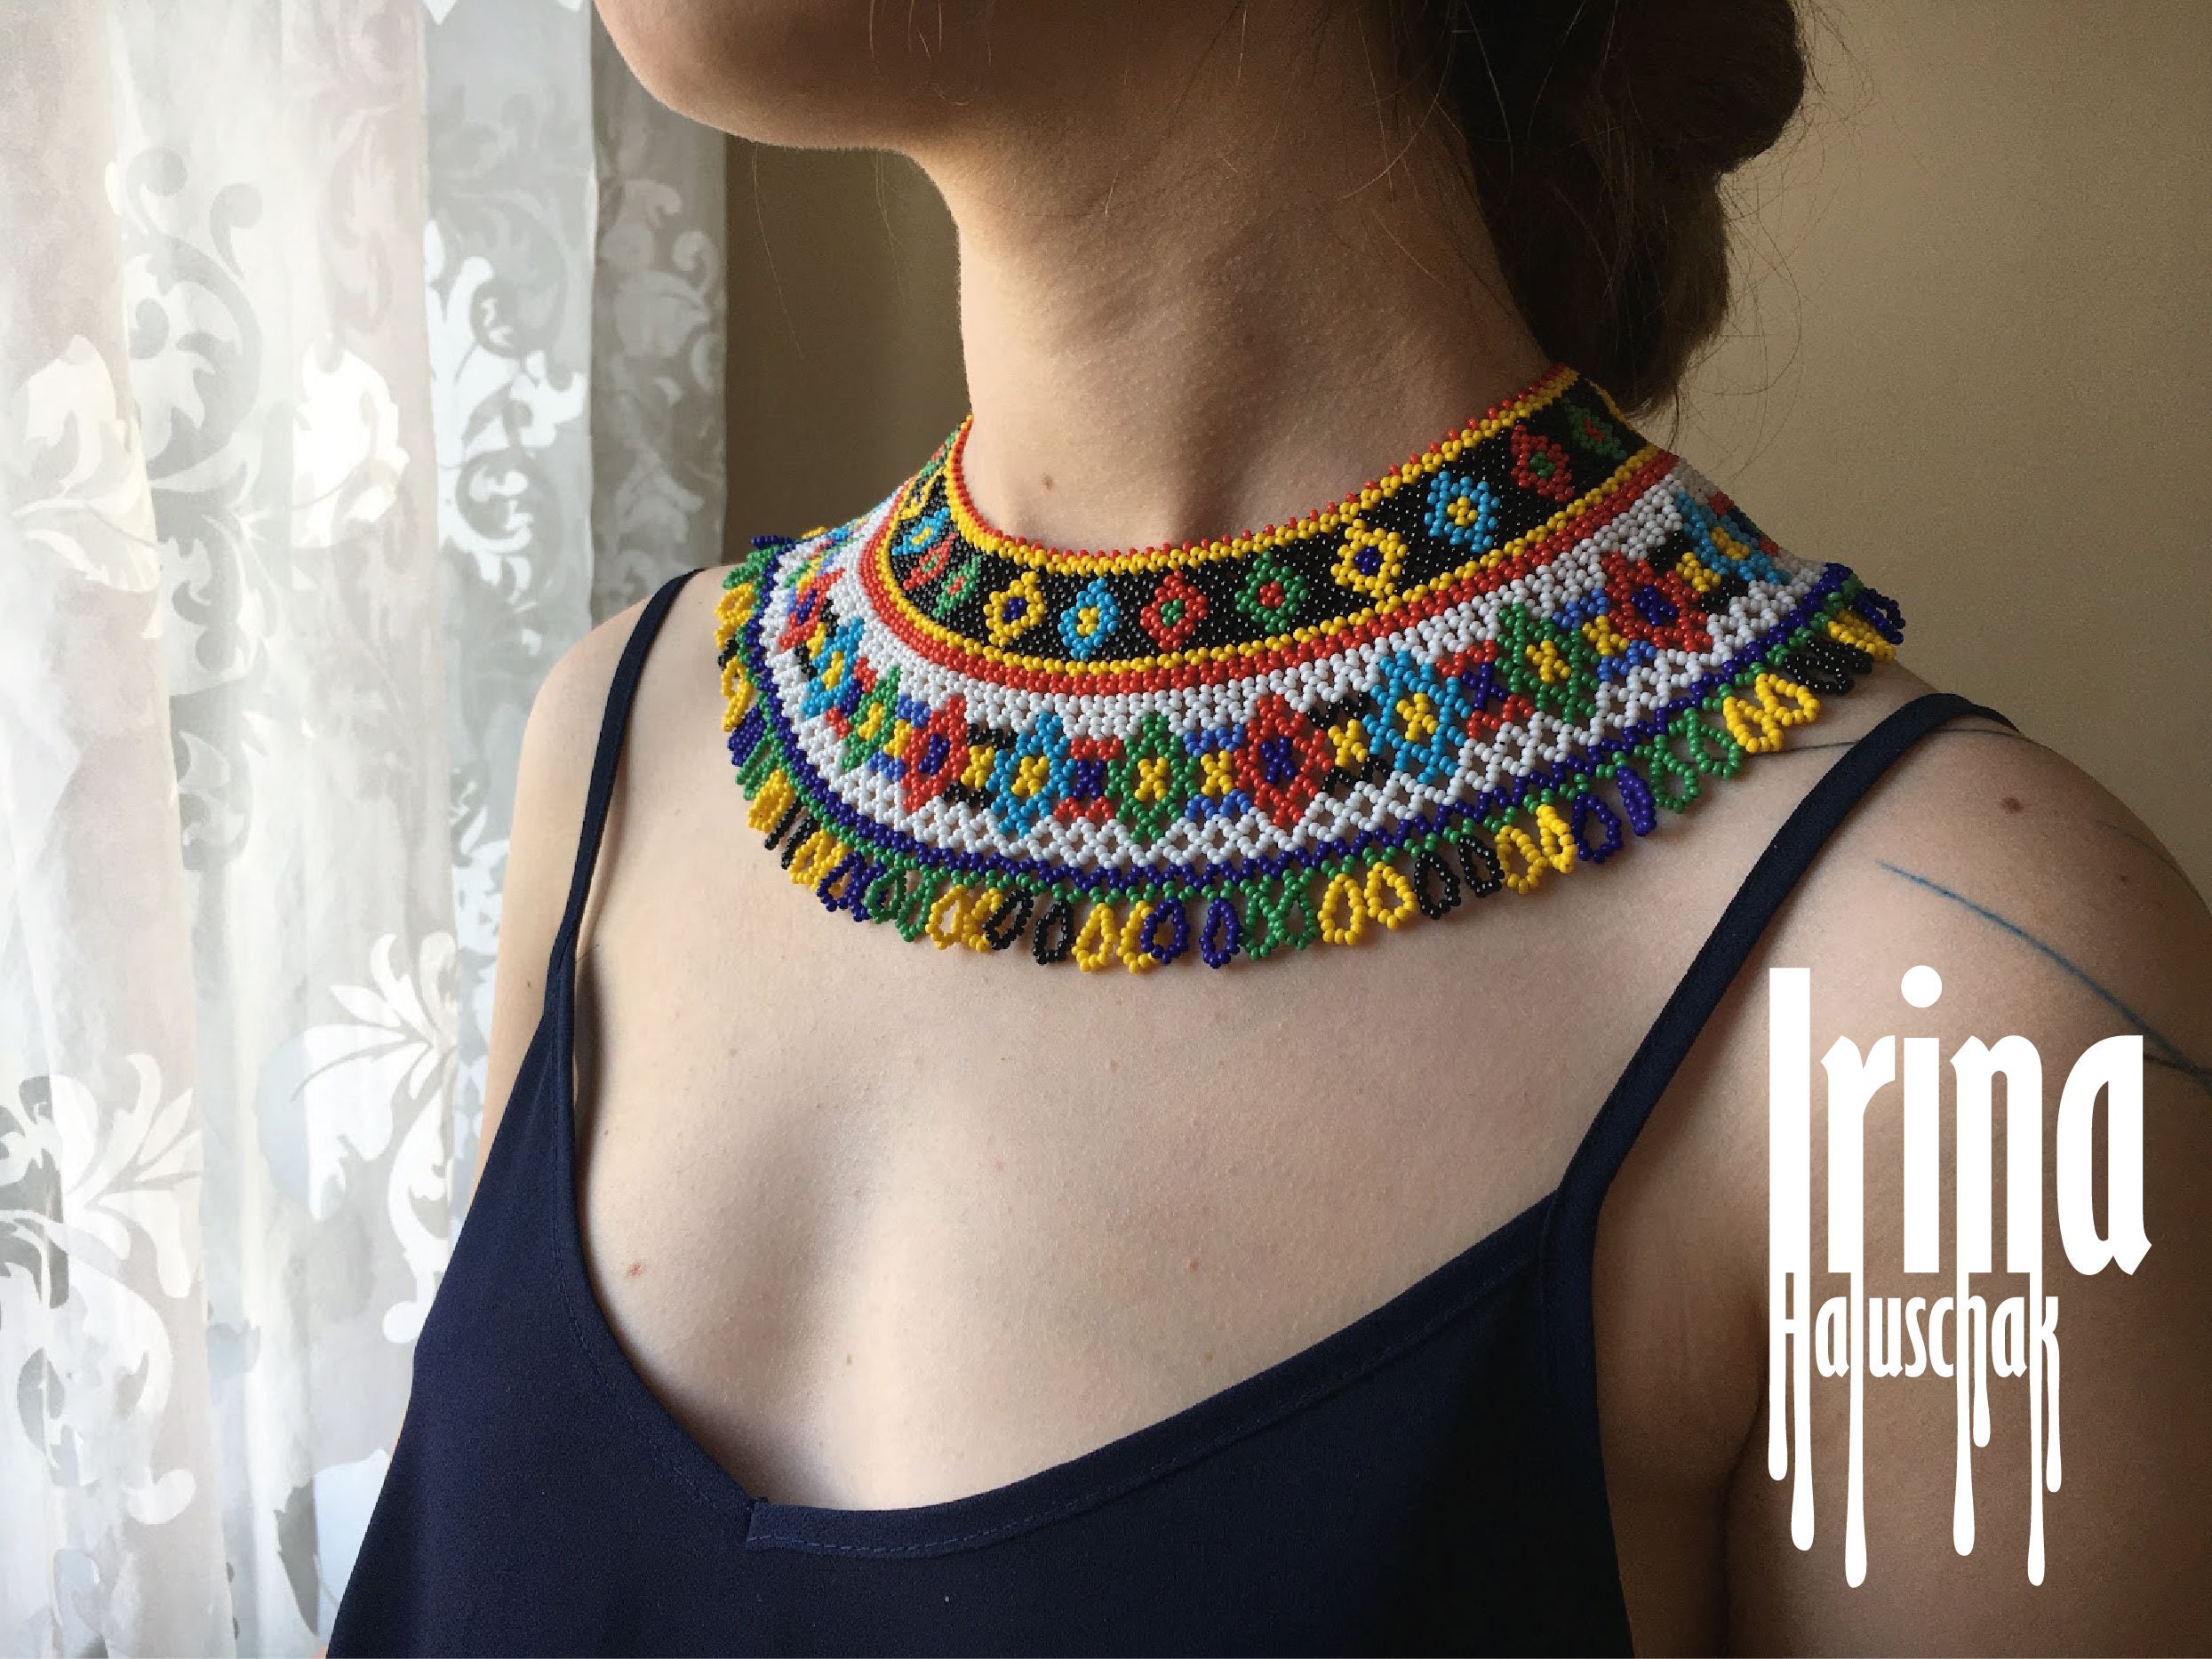 Sylianka Verkhovynska from beads – Starlight necklace